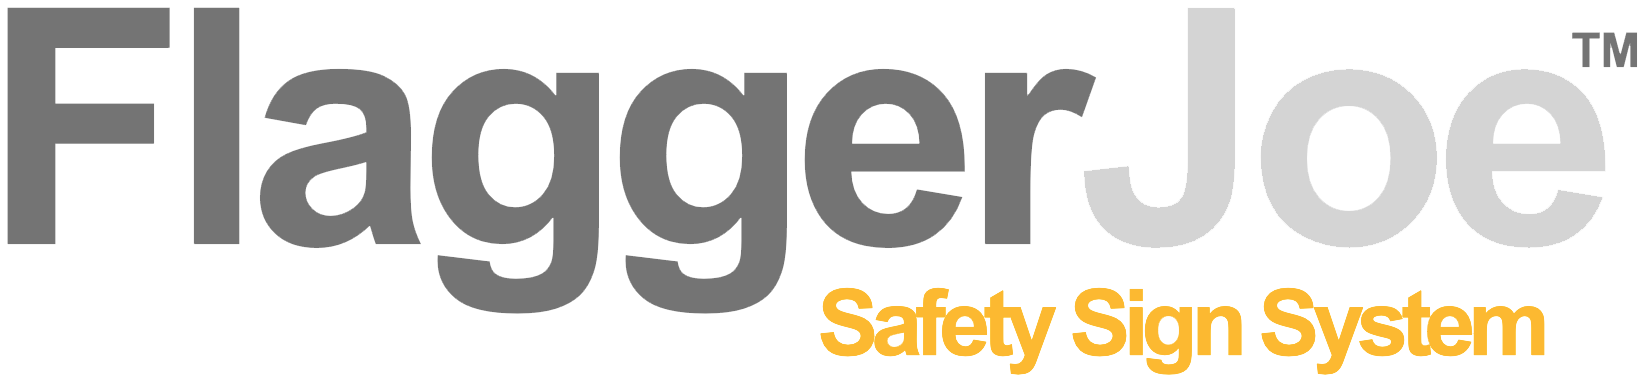 FlaggerJoe Logo